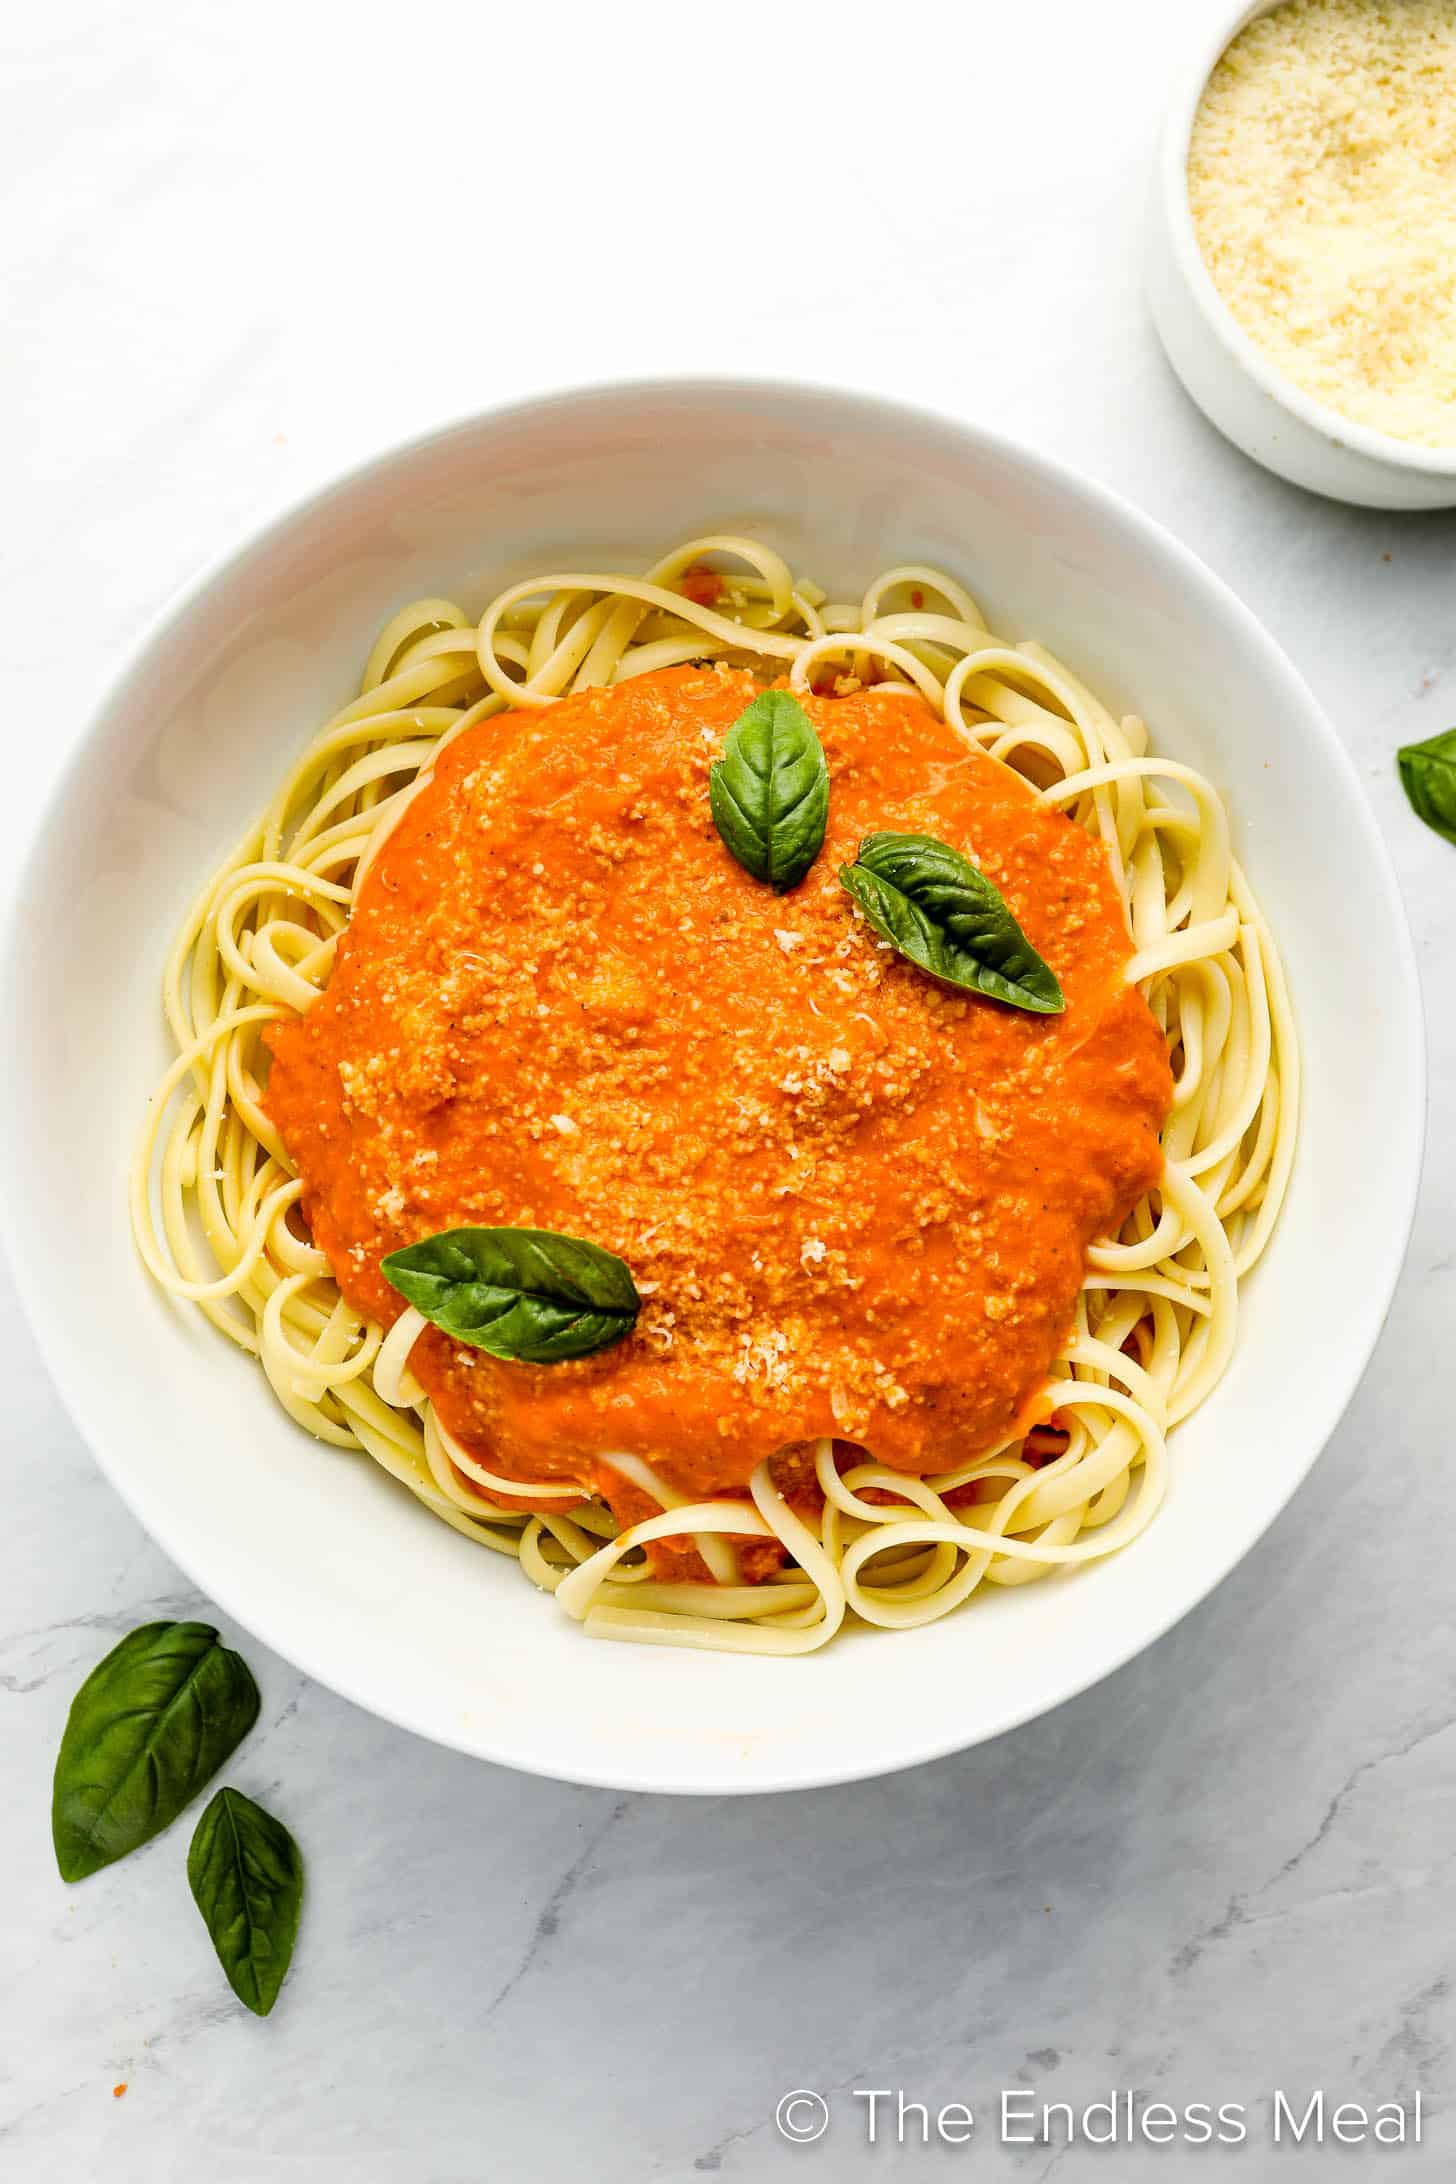 Tomato Cream Sauce over pasta in a dinner bowl.